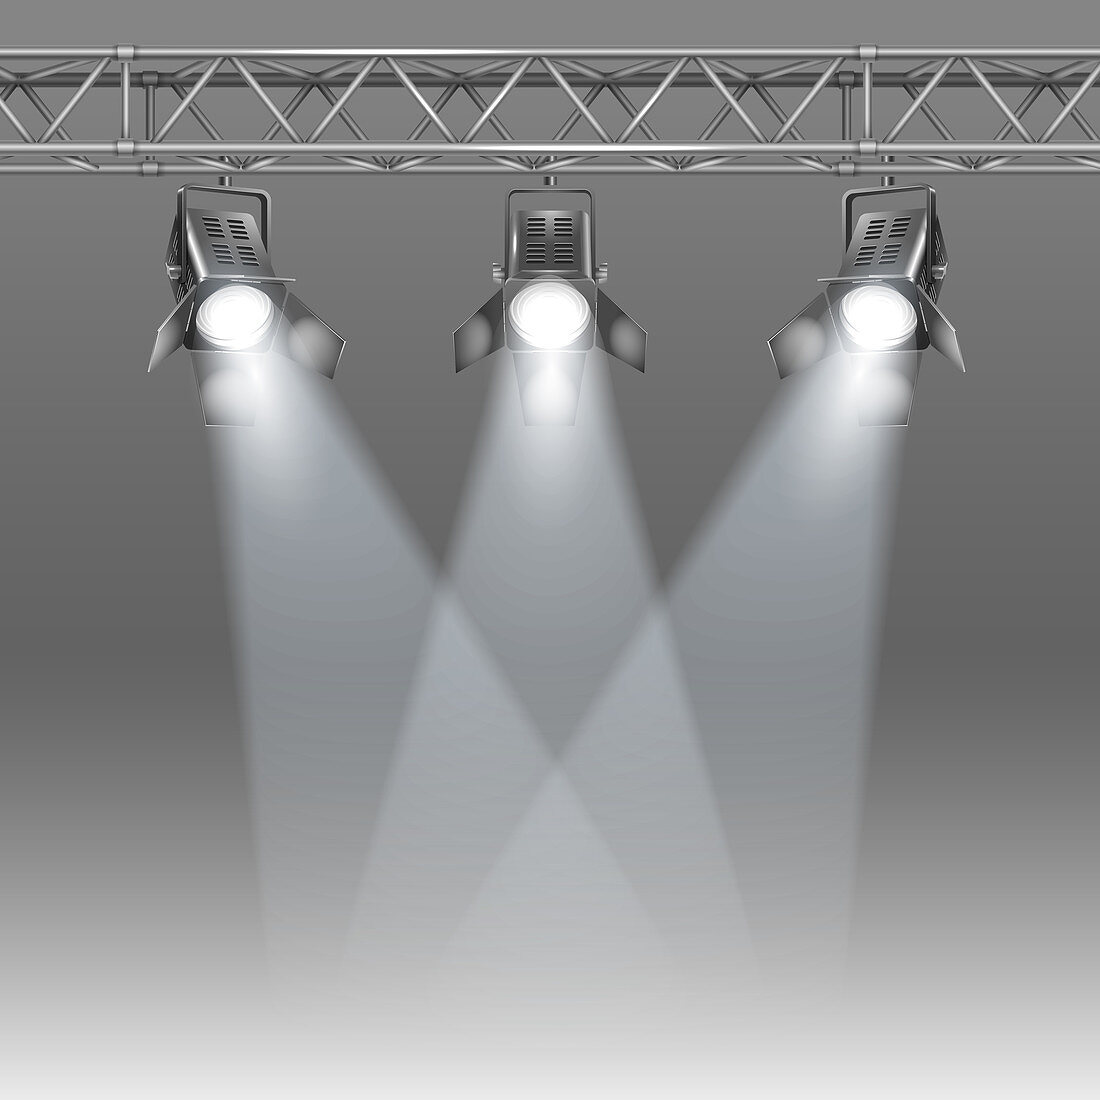 Stage spotlights, illustration